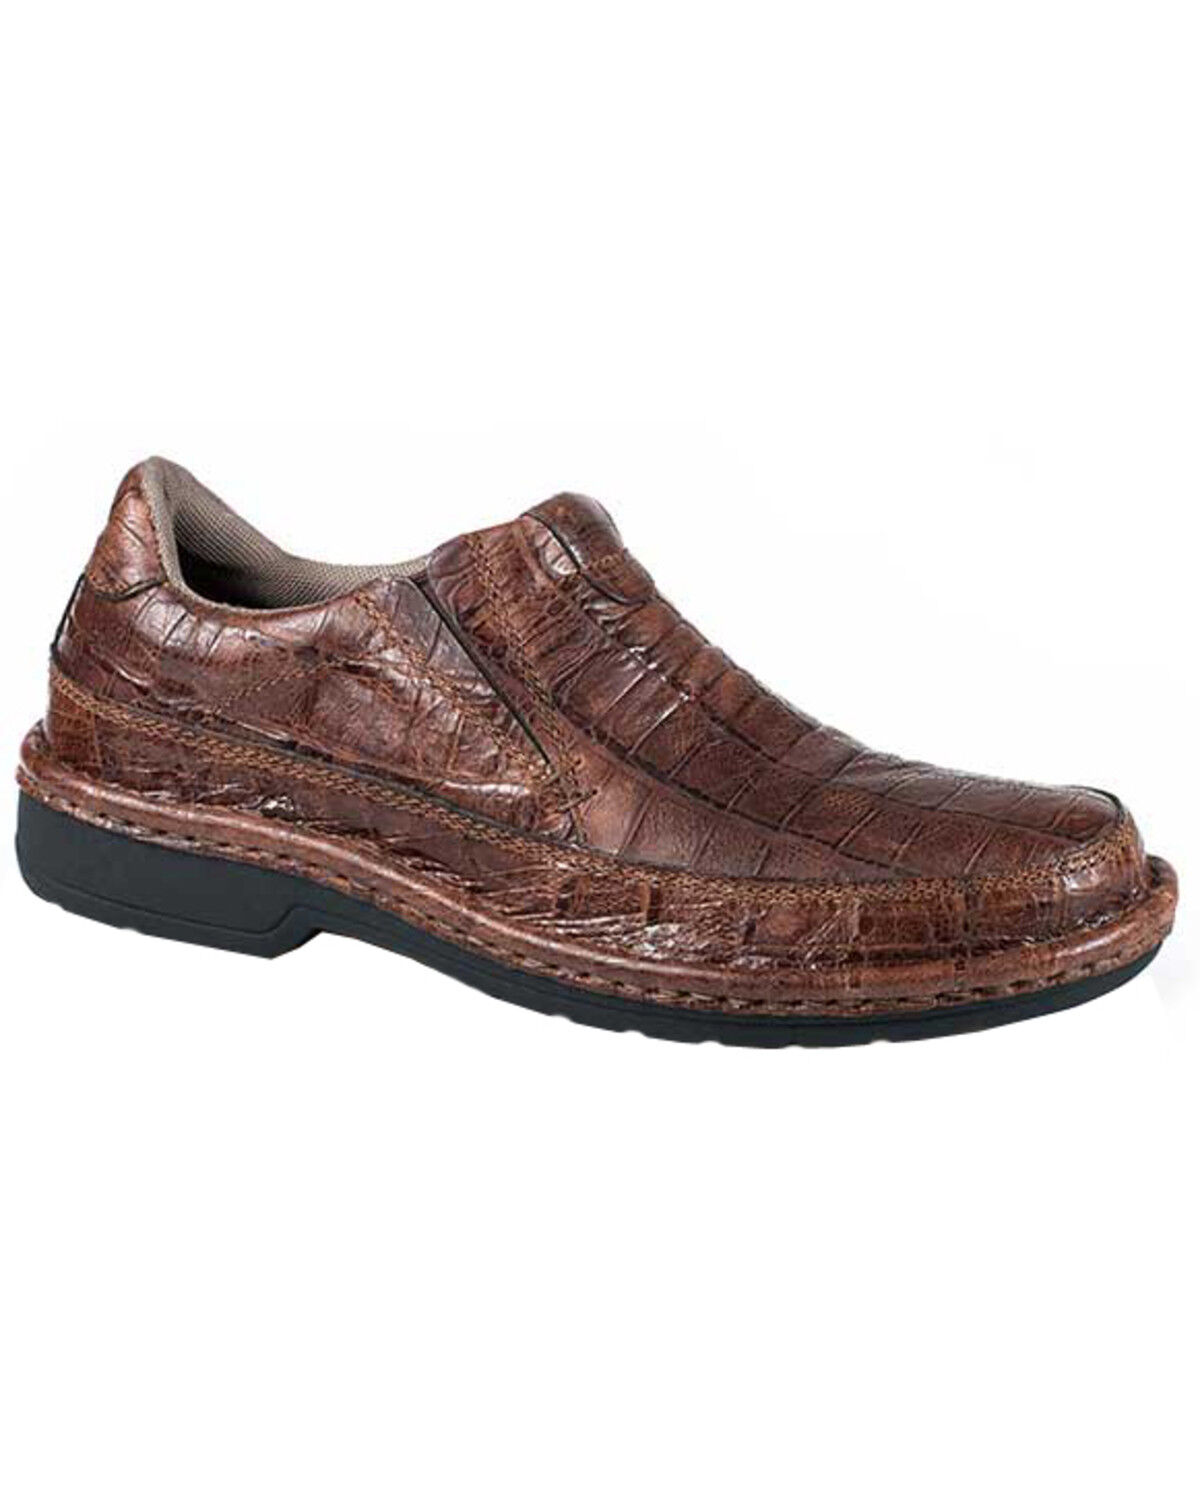 croc print shoes